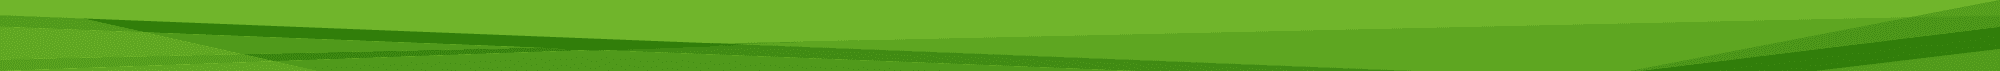 green banner bottom - Events Dashboard